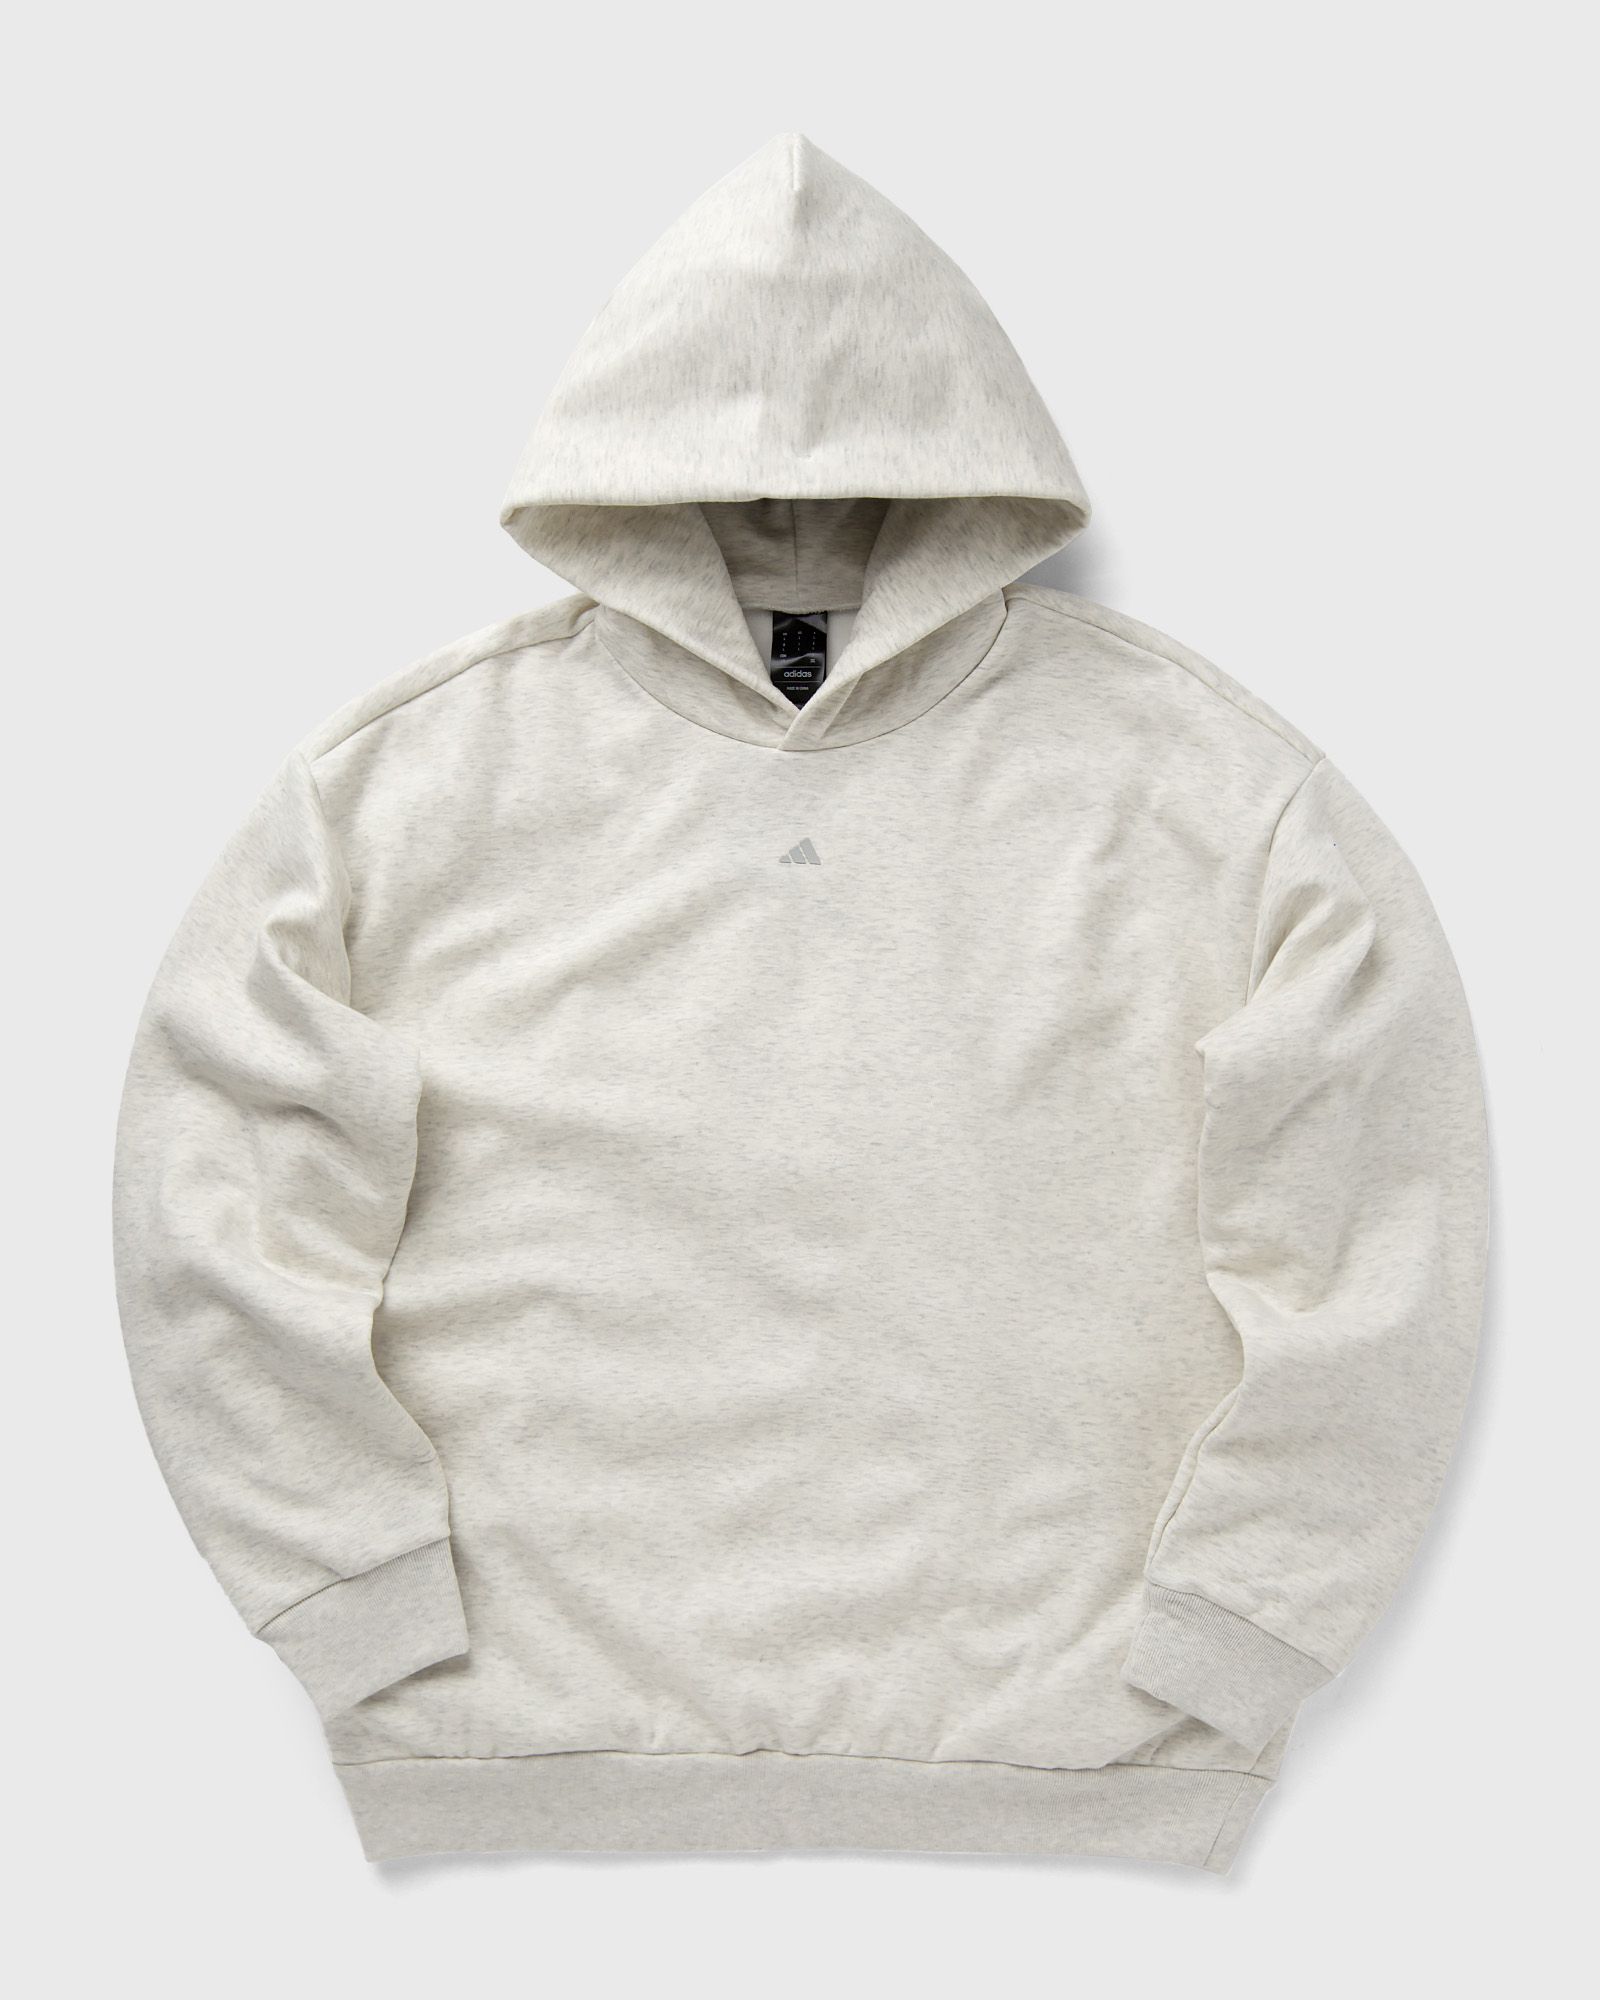 Adidas - one fl hoody men hoodies white in größe:xl